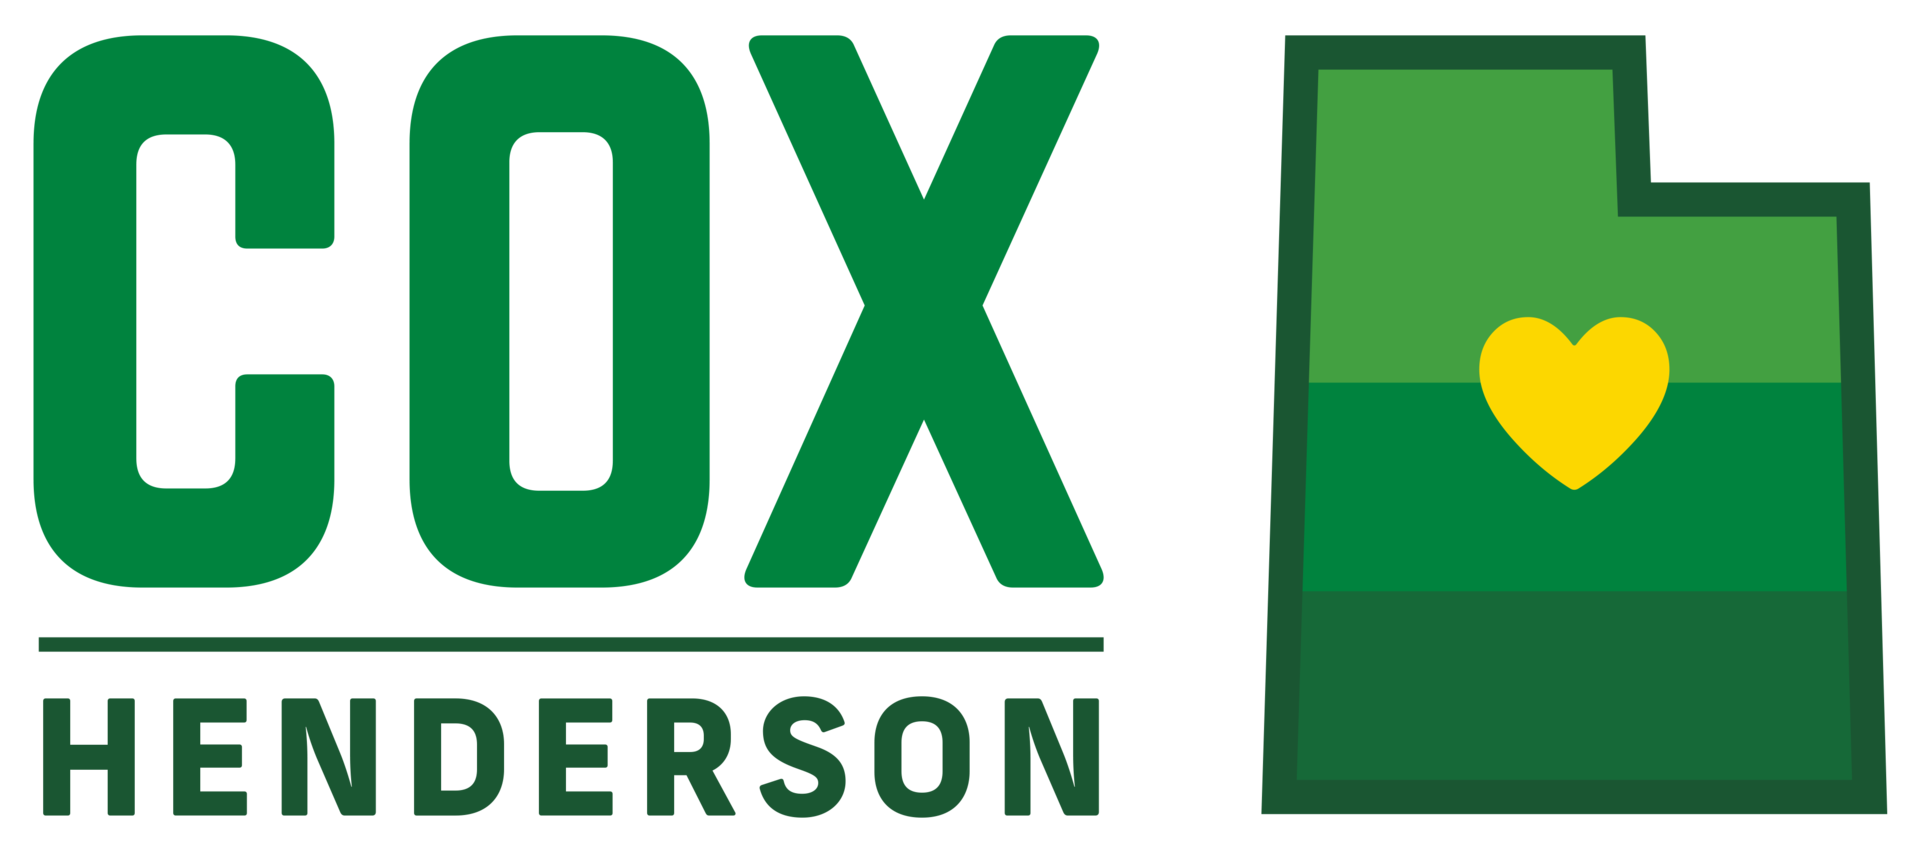 Cox henderson green